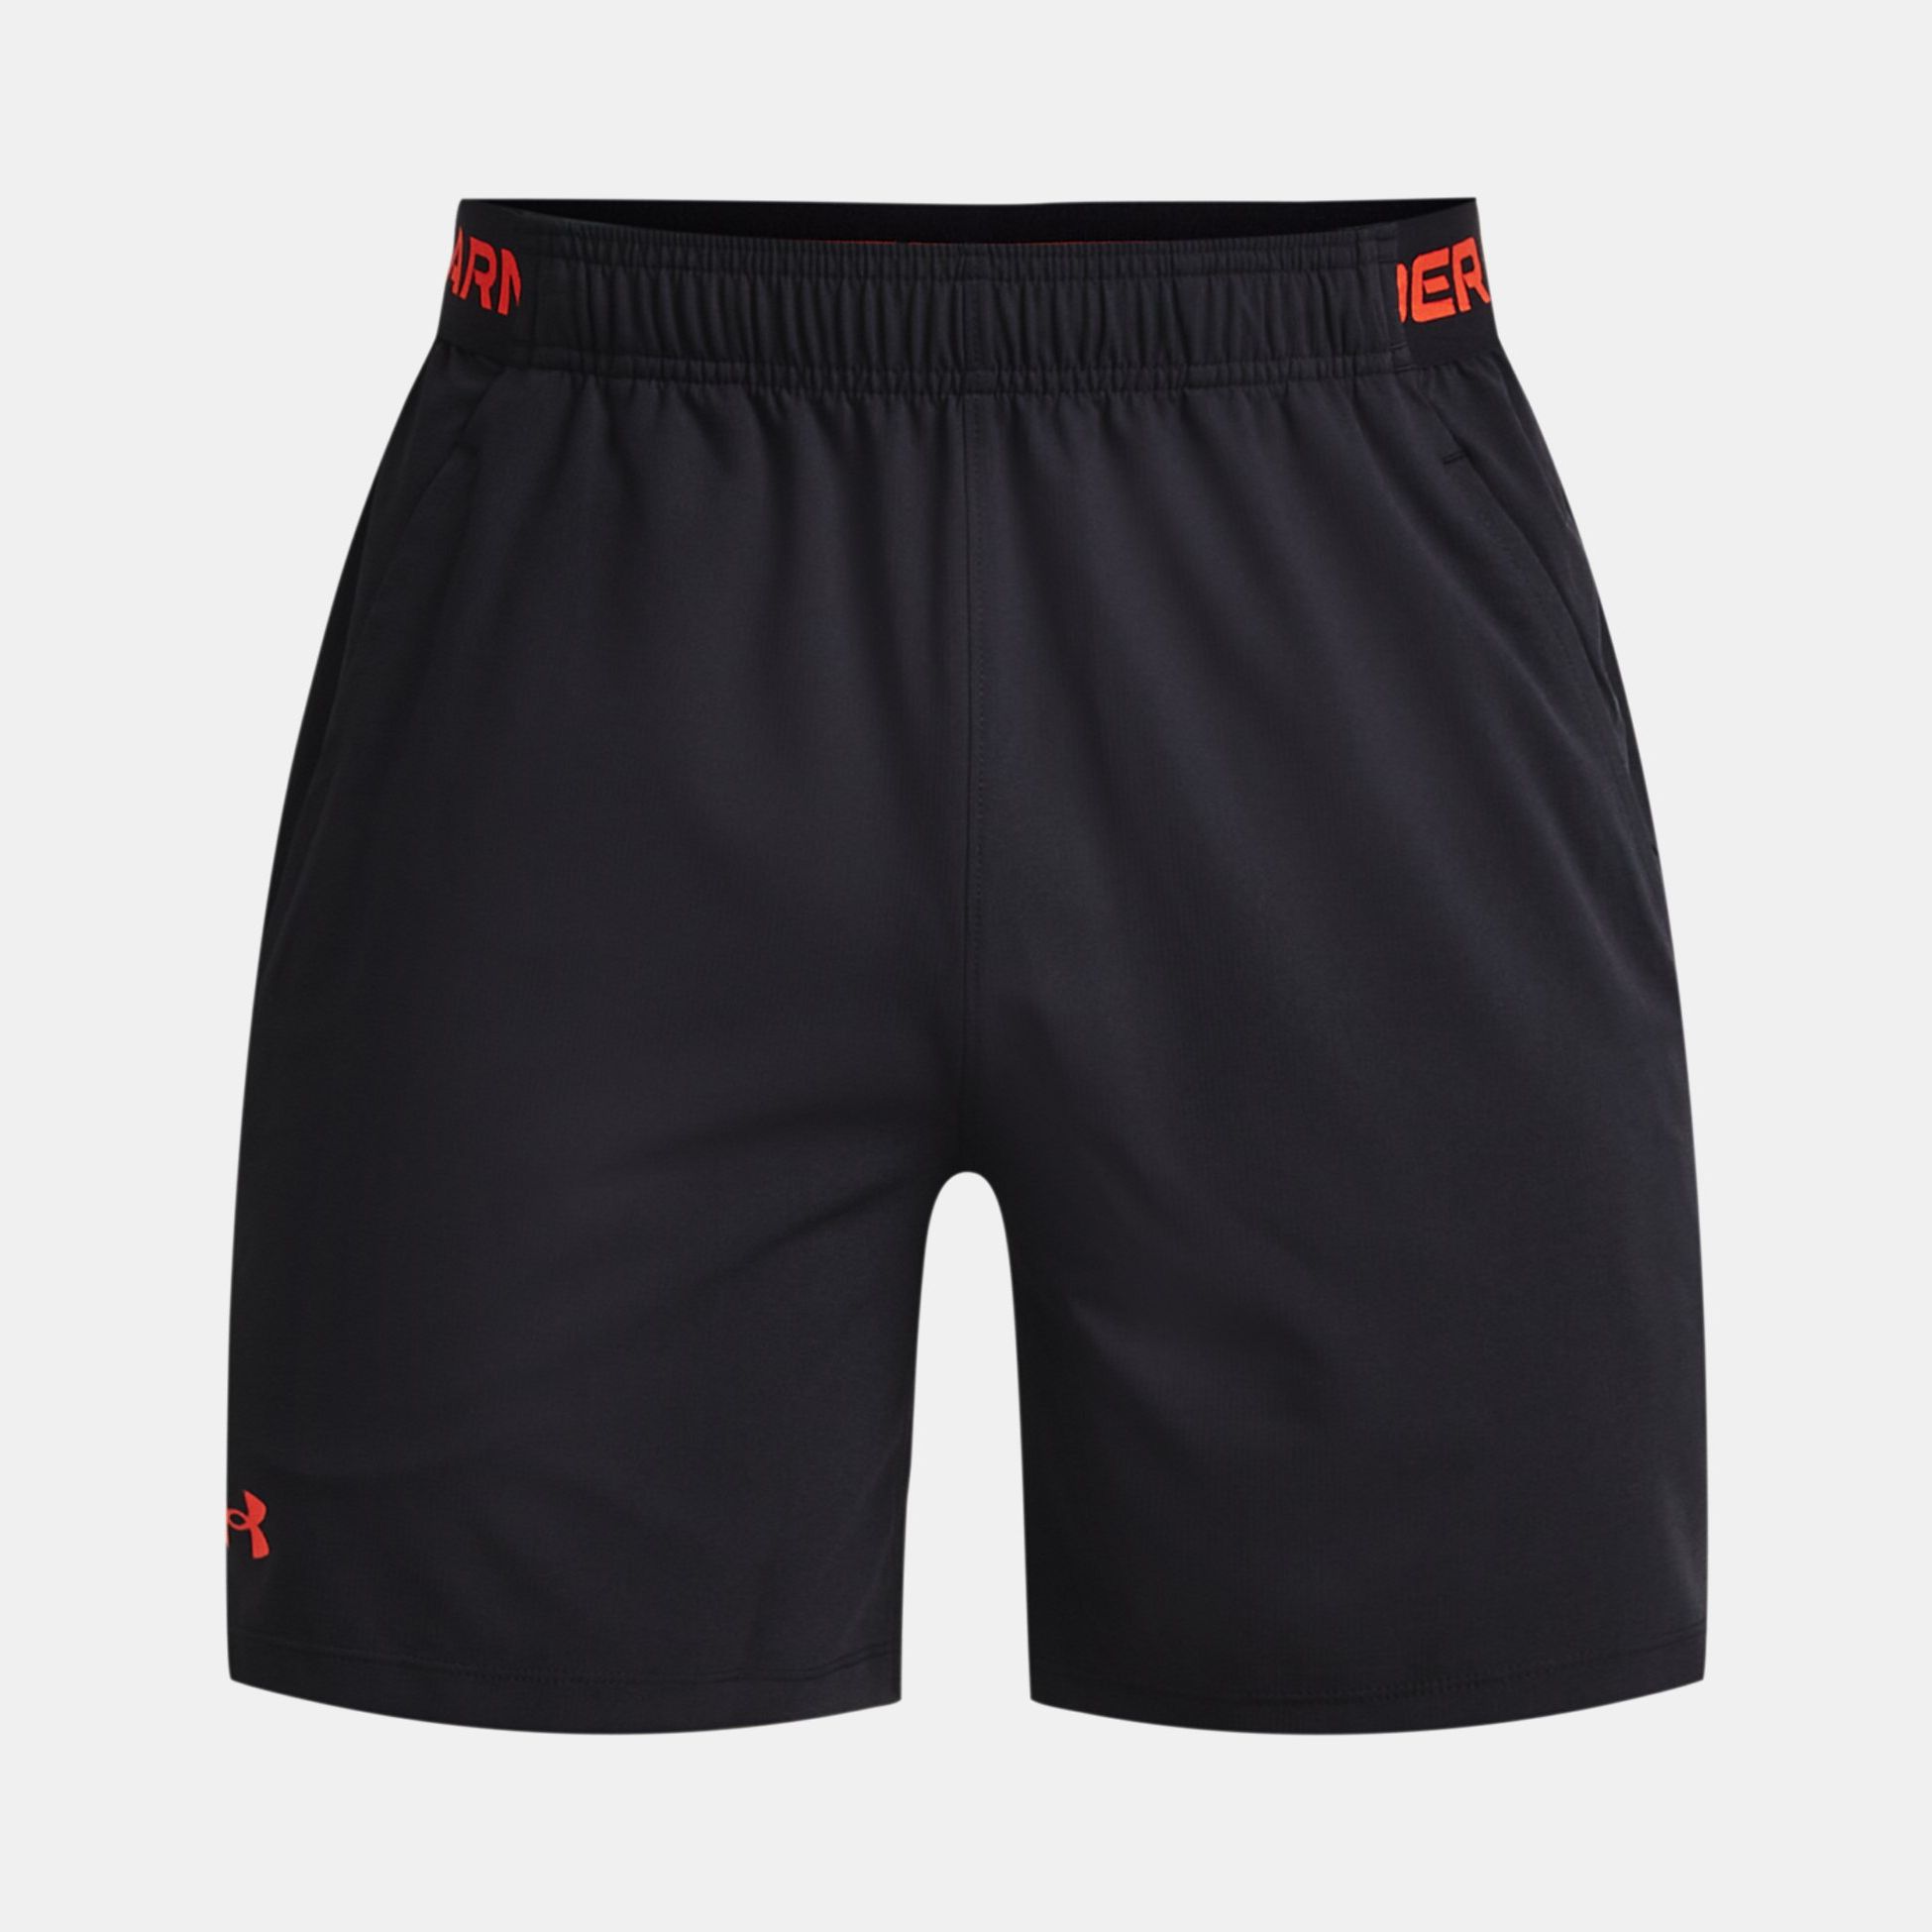 Shorts -  under armour UA Vanish Woven 6inch Shorts